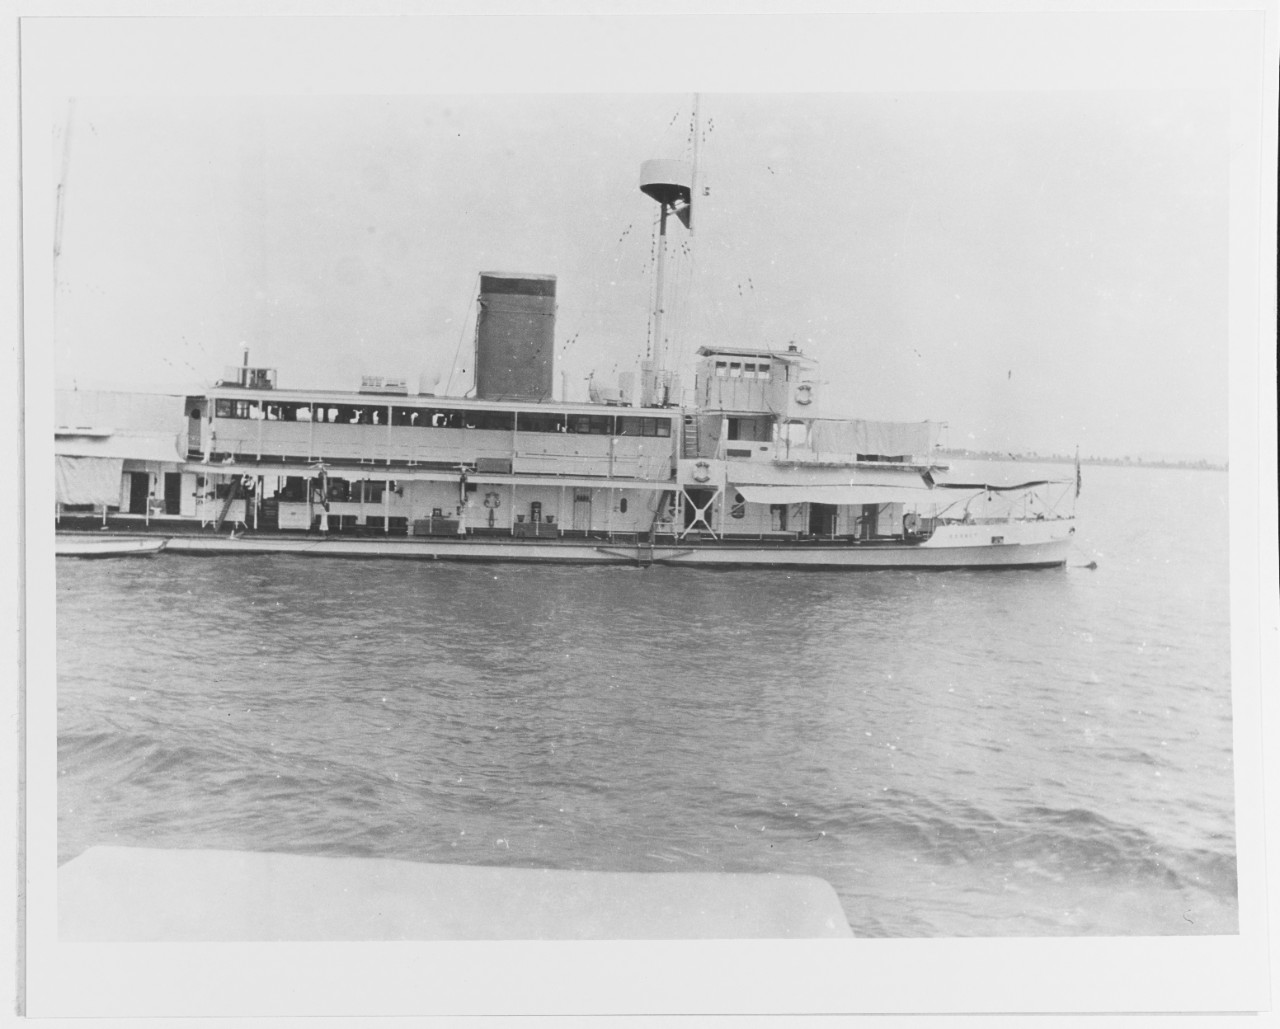 GANNET (British river gunboat, 1927)